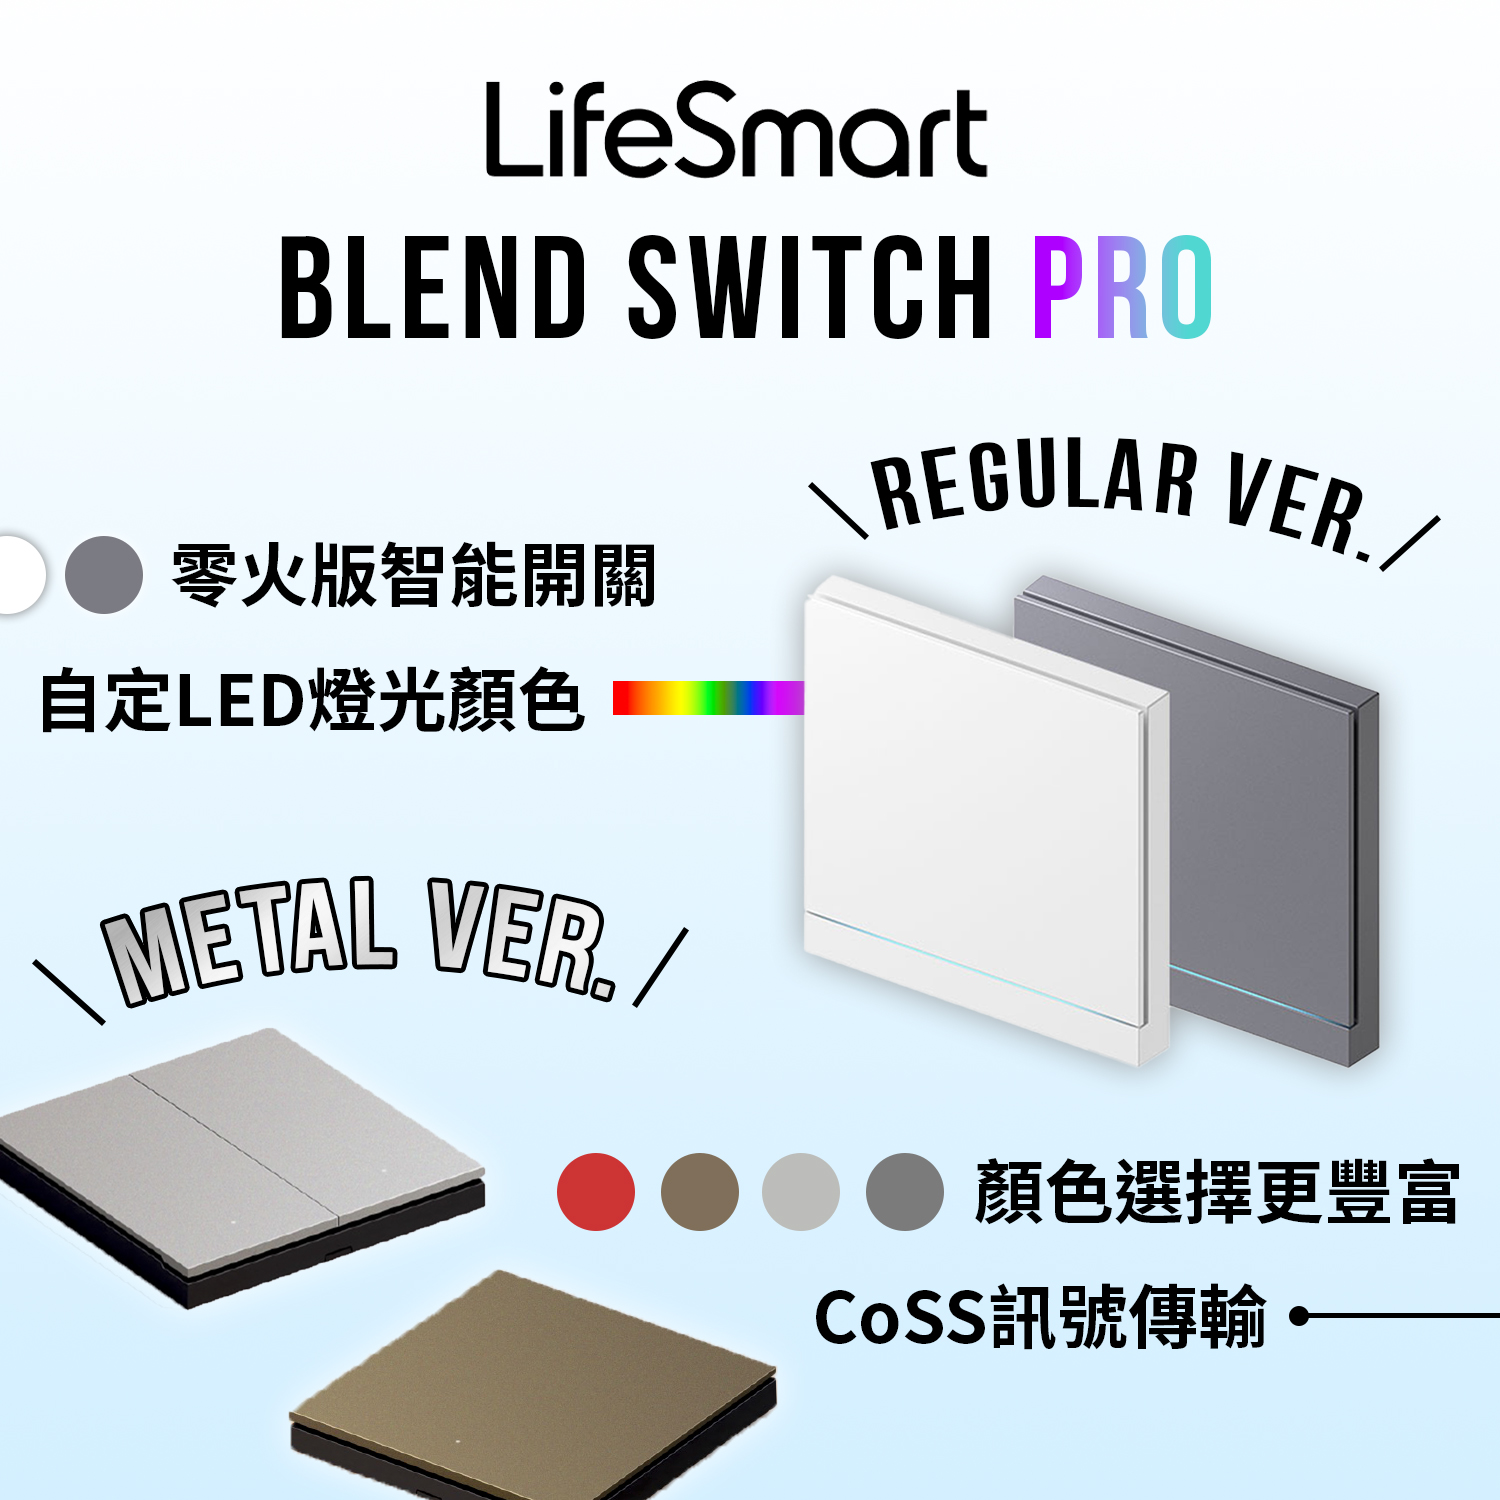 blend switch pro